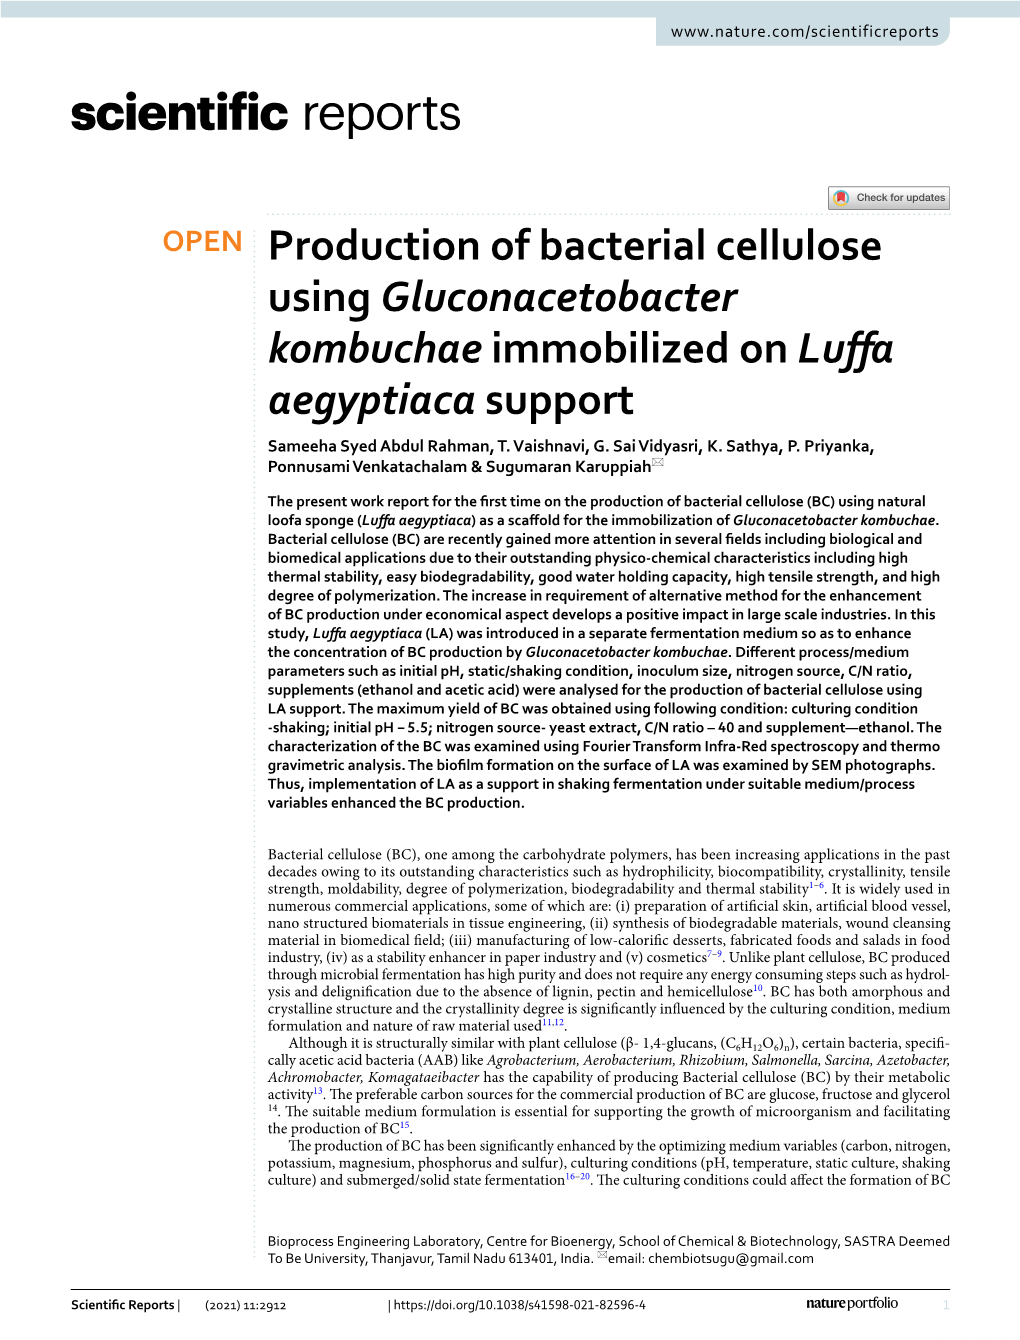 Production of Bacterial Cellulose Using Gluconacetobacter Kombuchae Immobilized on Lufa Aegyptiaca Support Sameeha Syed Abdul Rahman, T